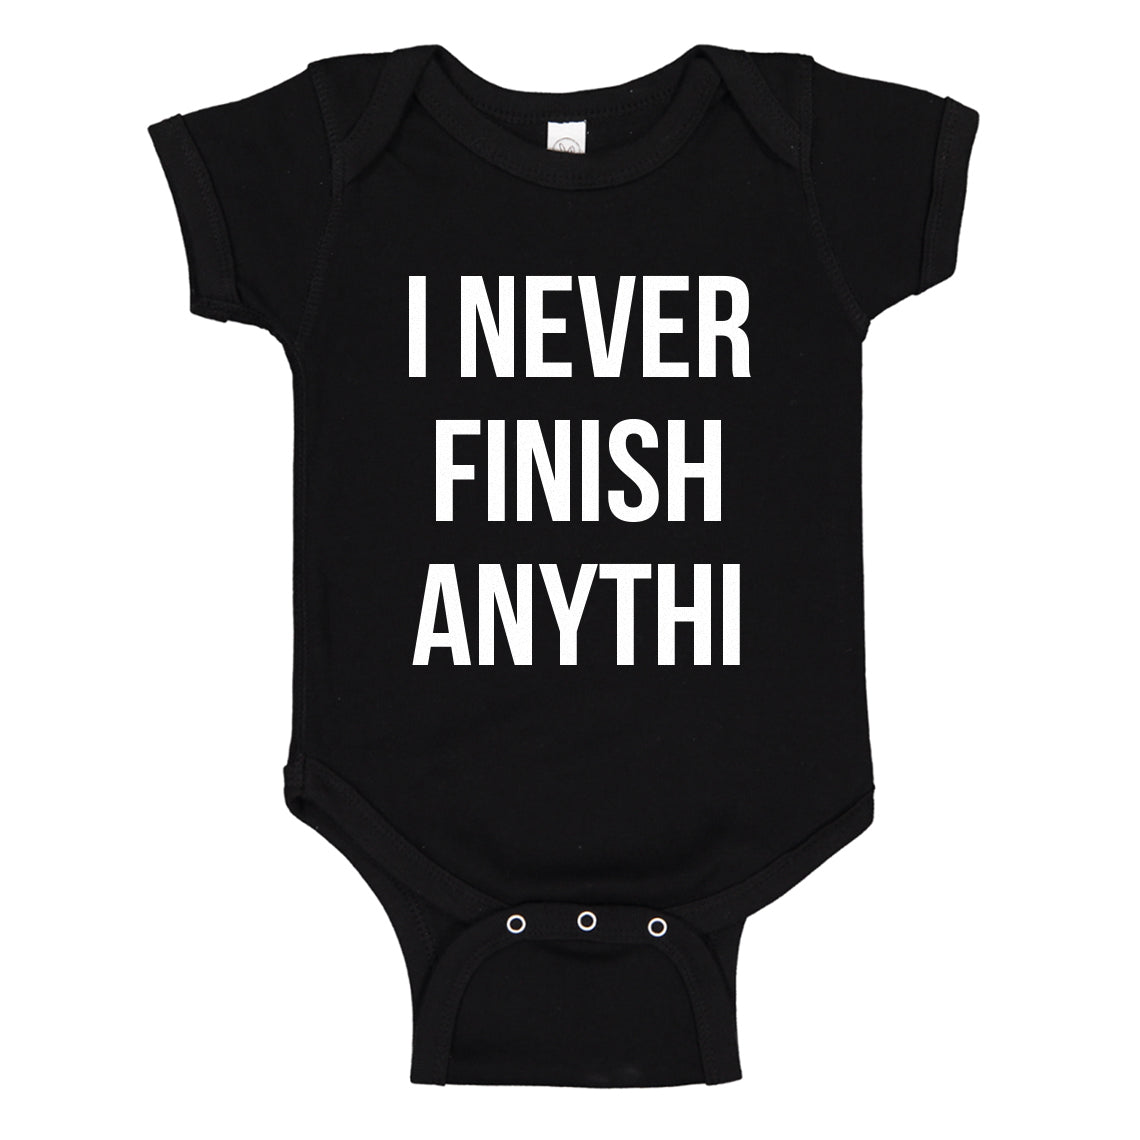 Baby Onesie I Never Finish Anythi 100% Cotton Infant Bodysuit